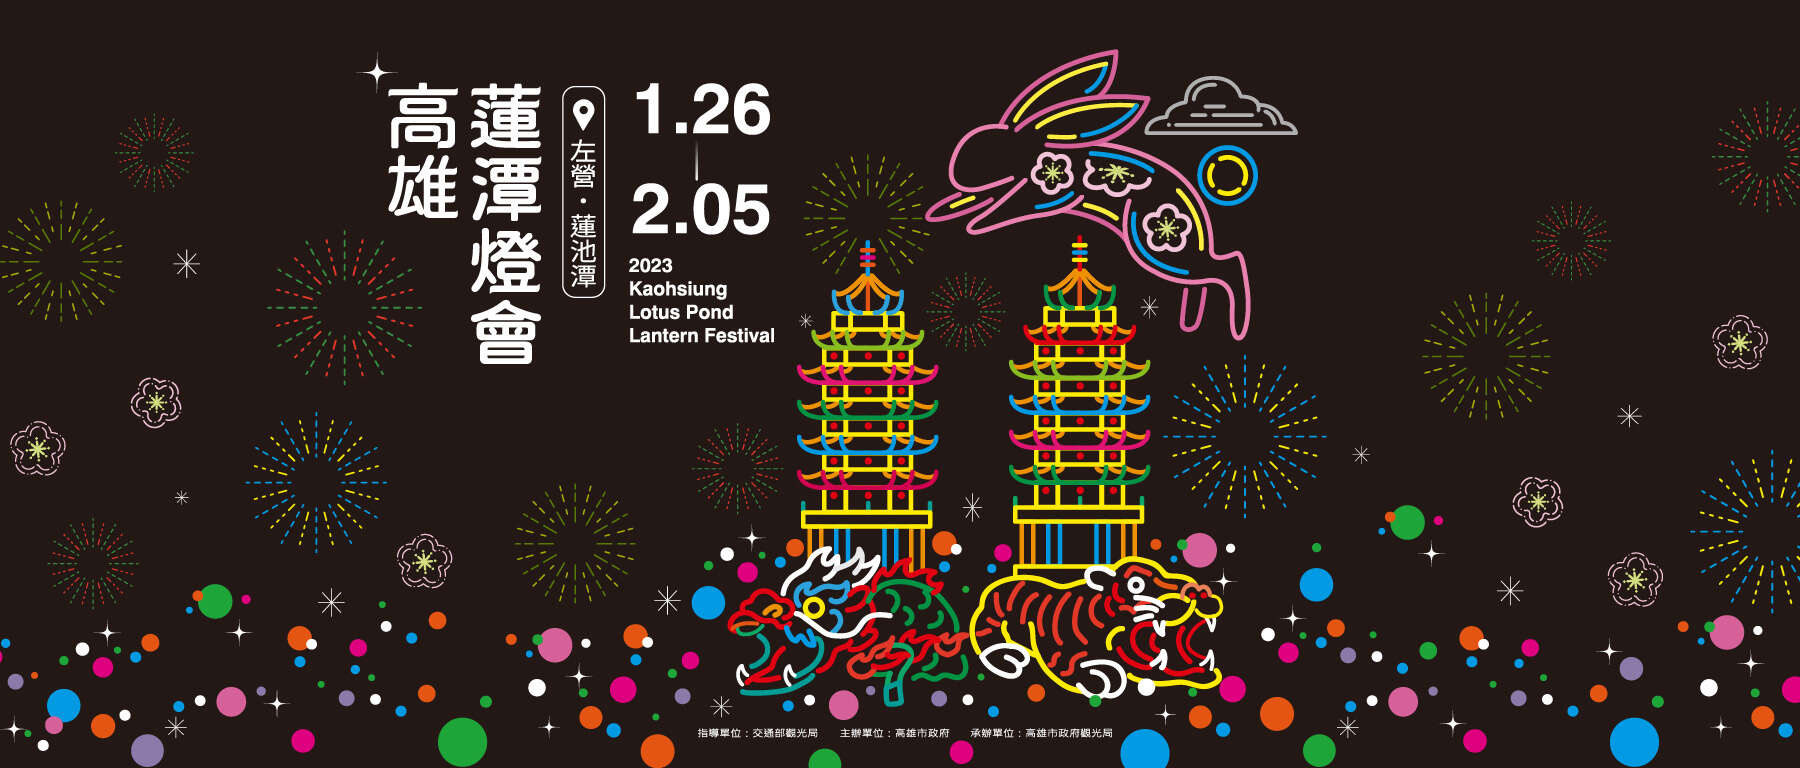 Festival Lentera Kota Kaohsiung